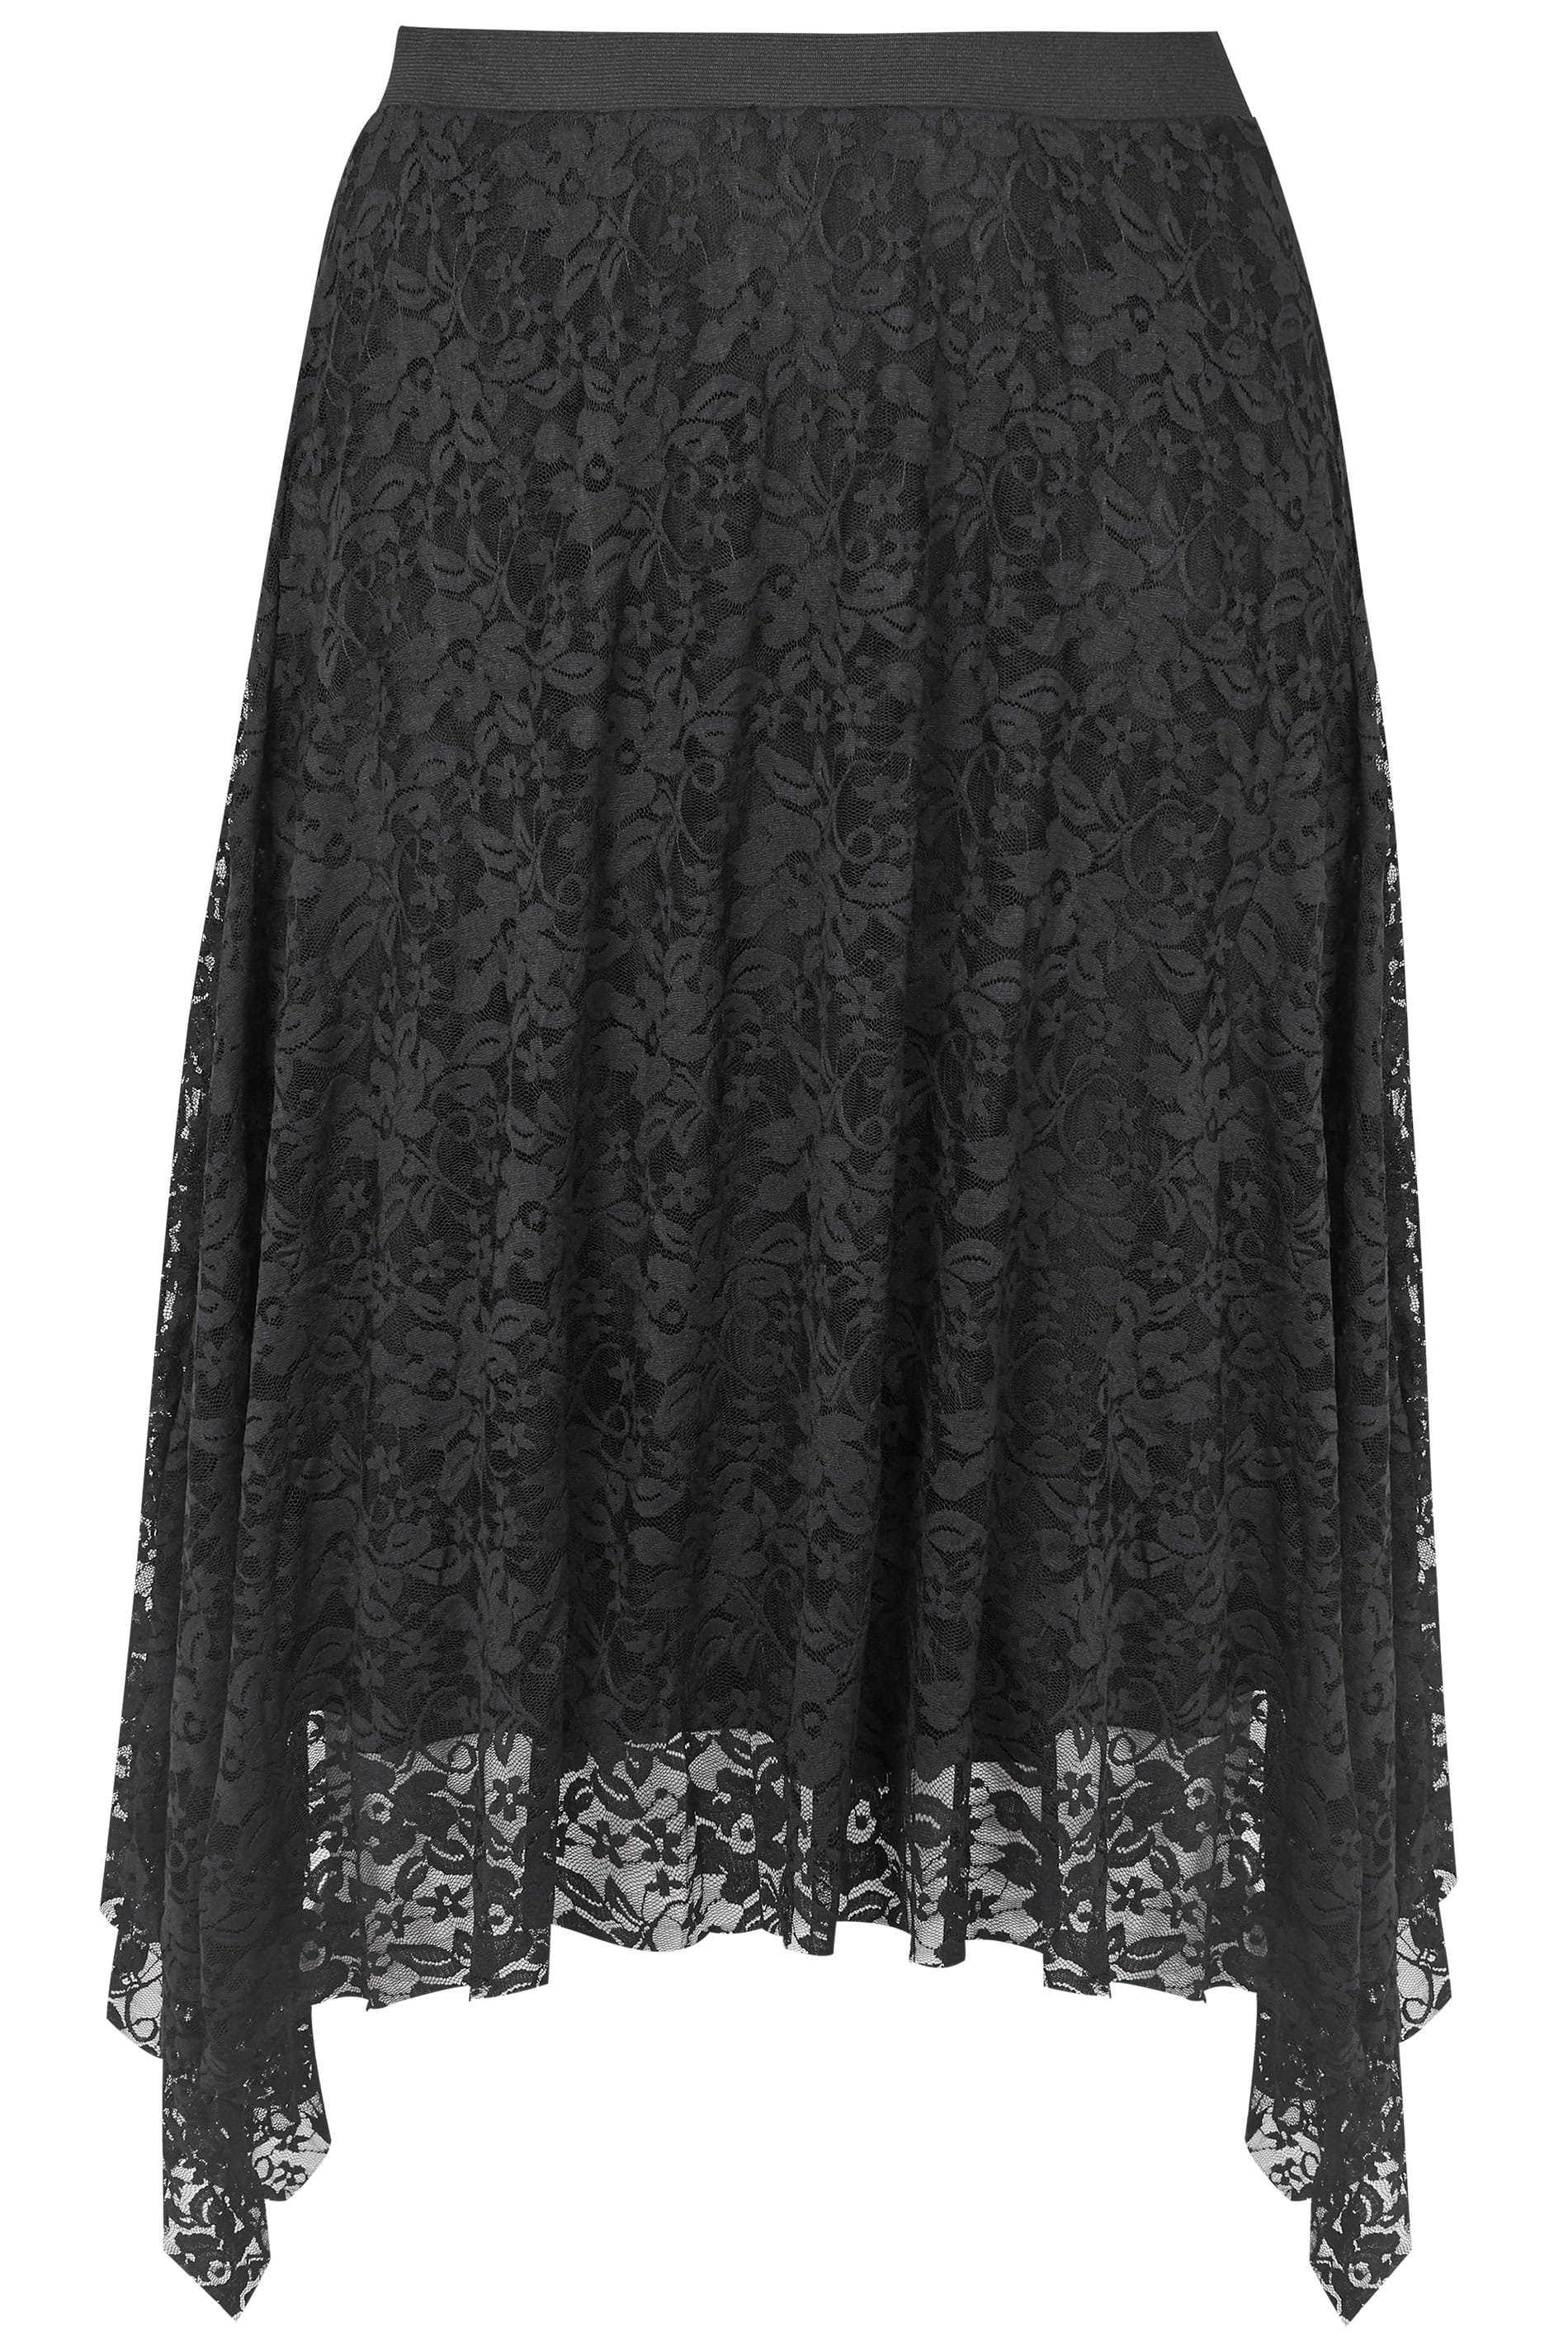 Black Lace Hanky Hem Skirt Plus Size 16 To 32